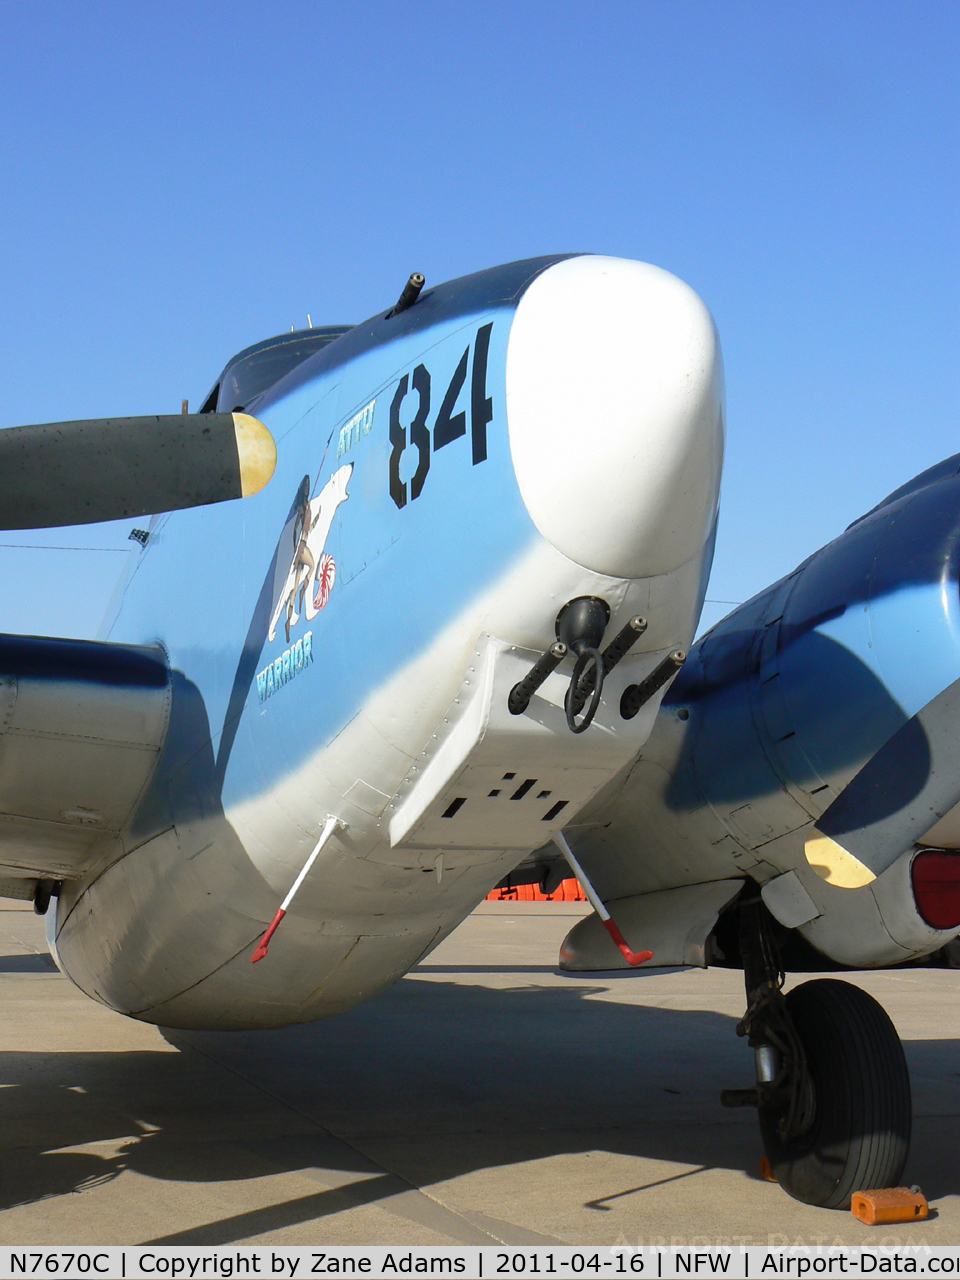 N7670C, 1945 Lockheed PV-2 Harpoon C/N 15-1438, At the 2011 Air Power Expo Airshow - NAS Fort Worth.